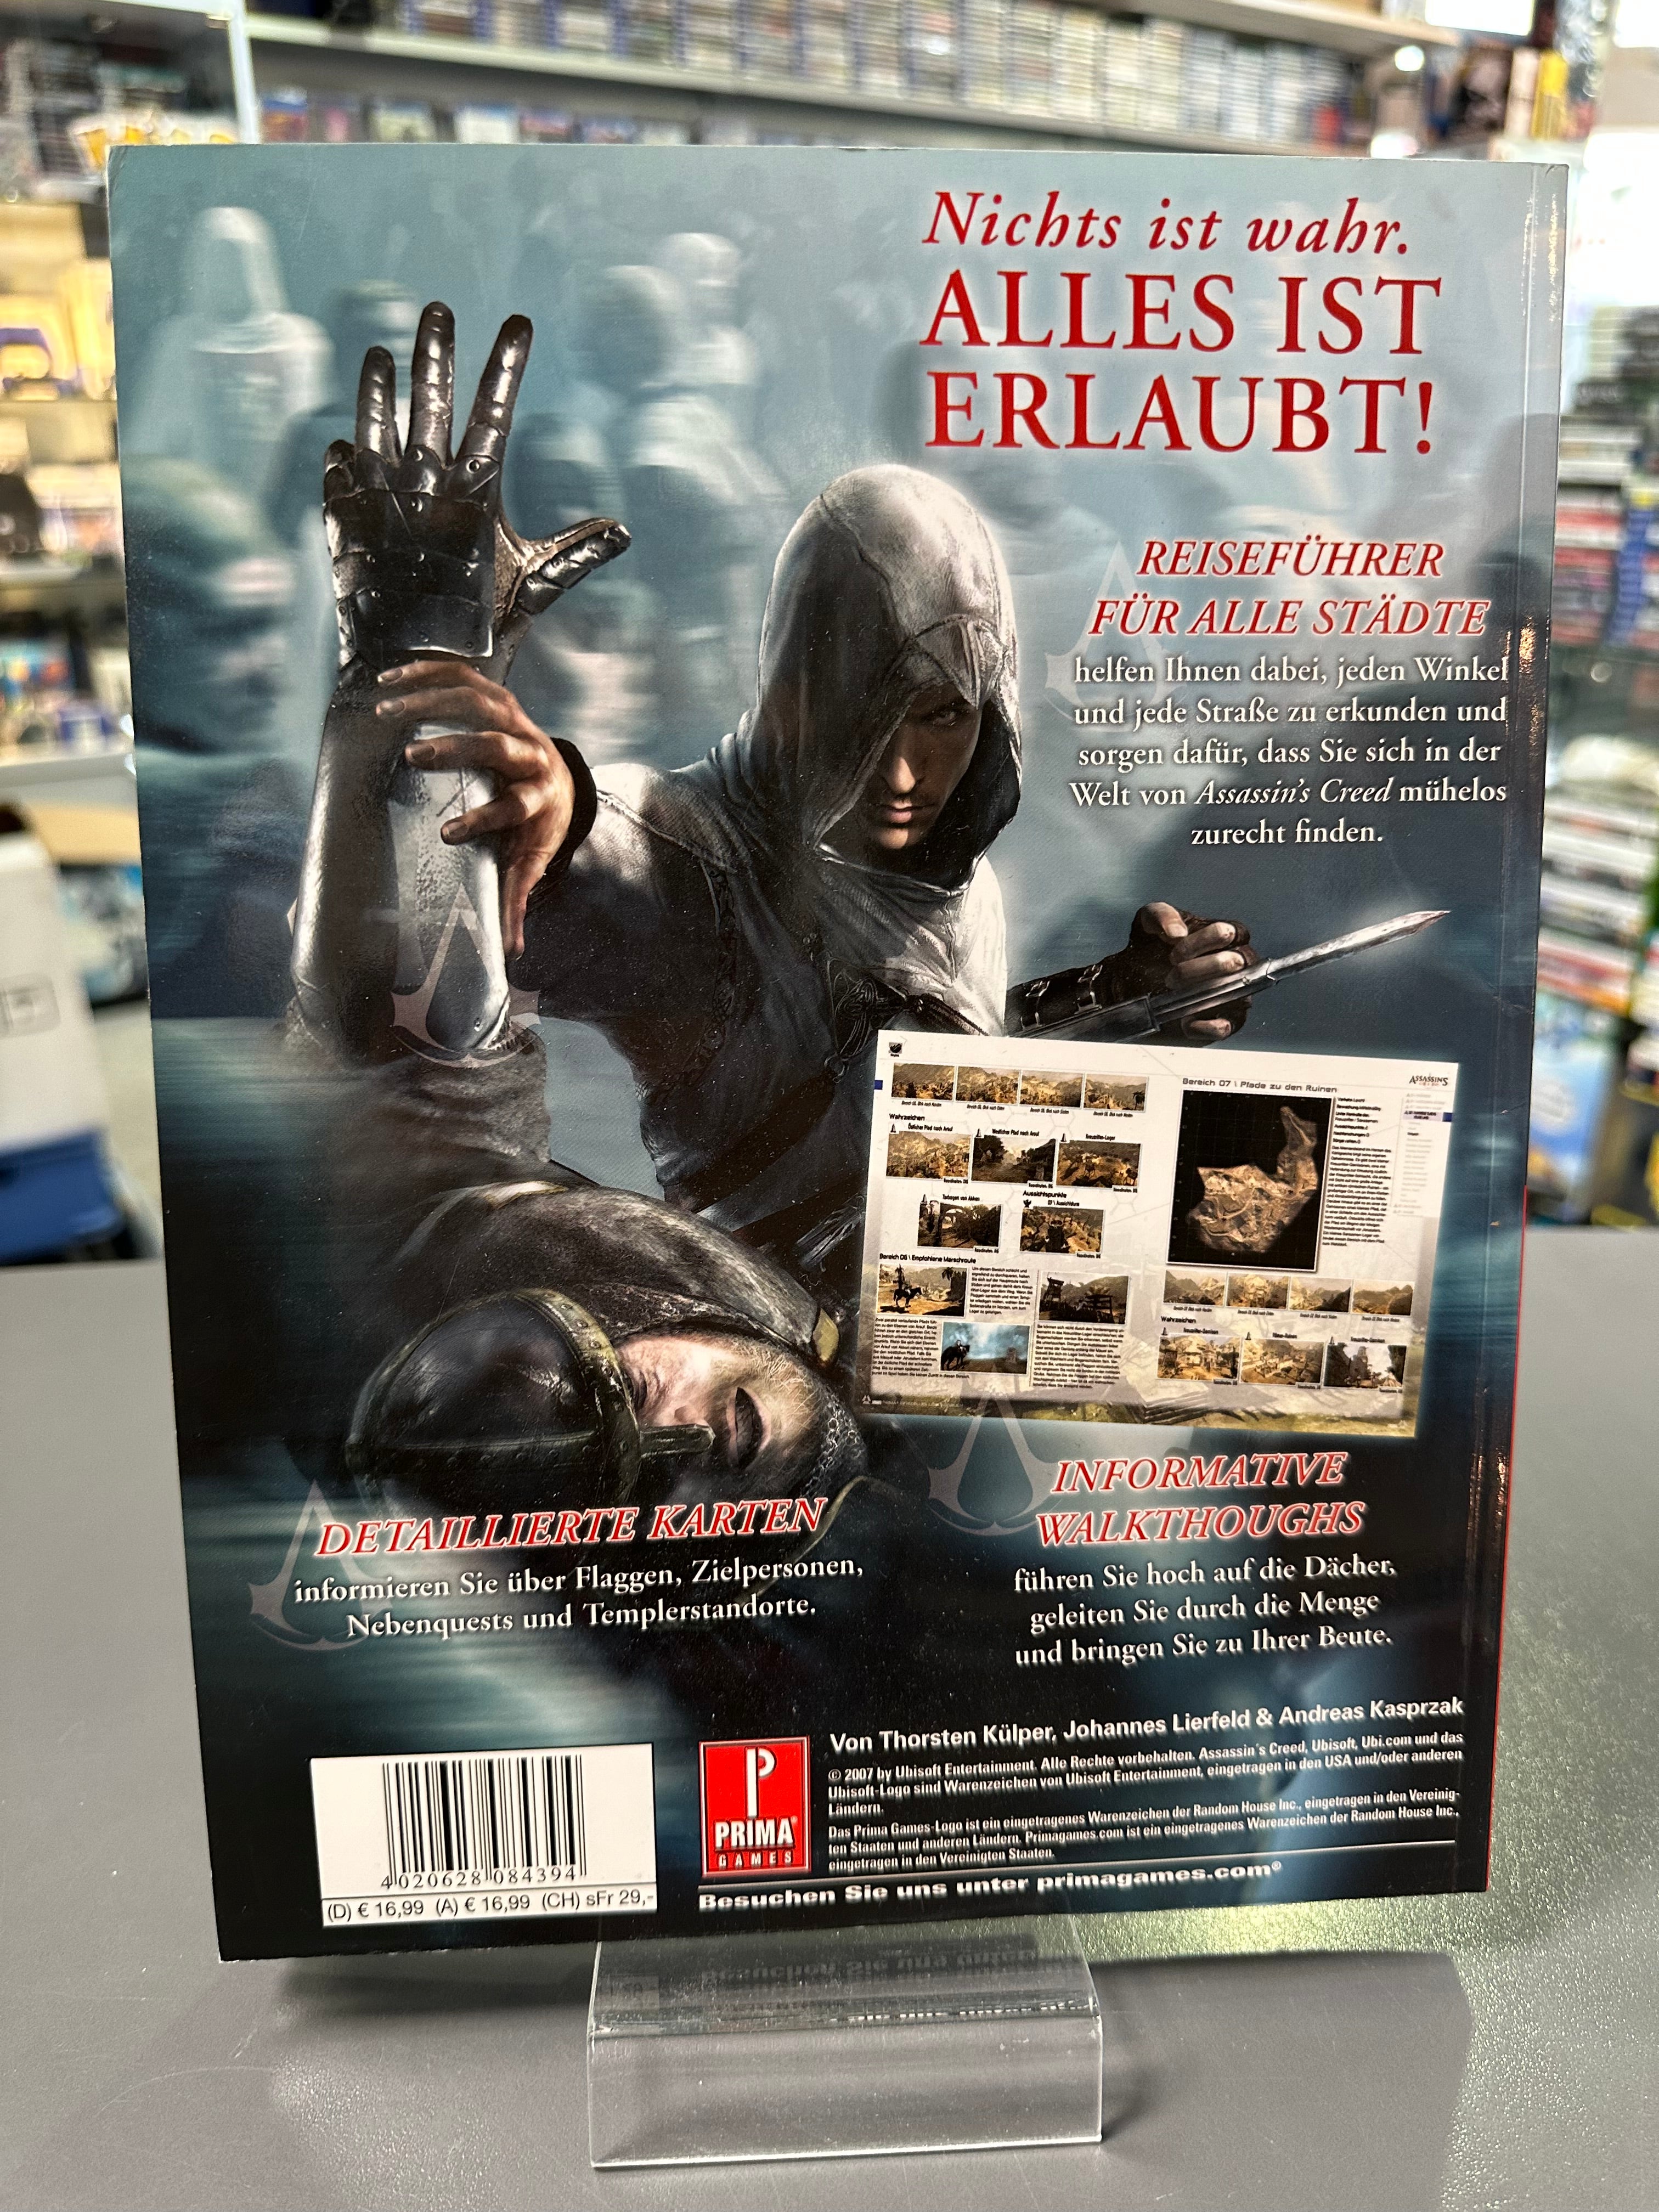 Assassins Creed Lösungsbuch